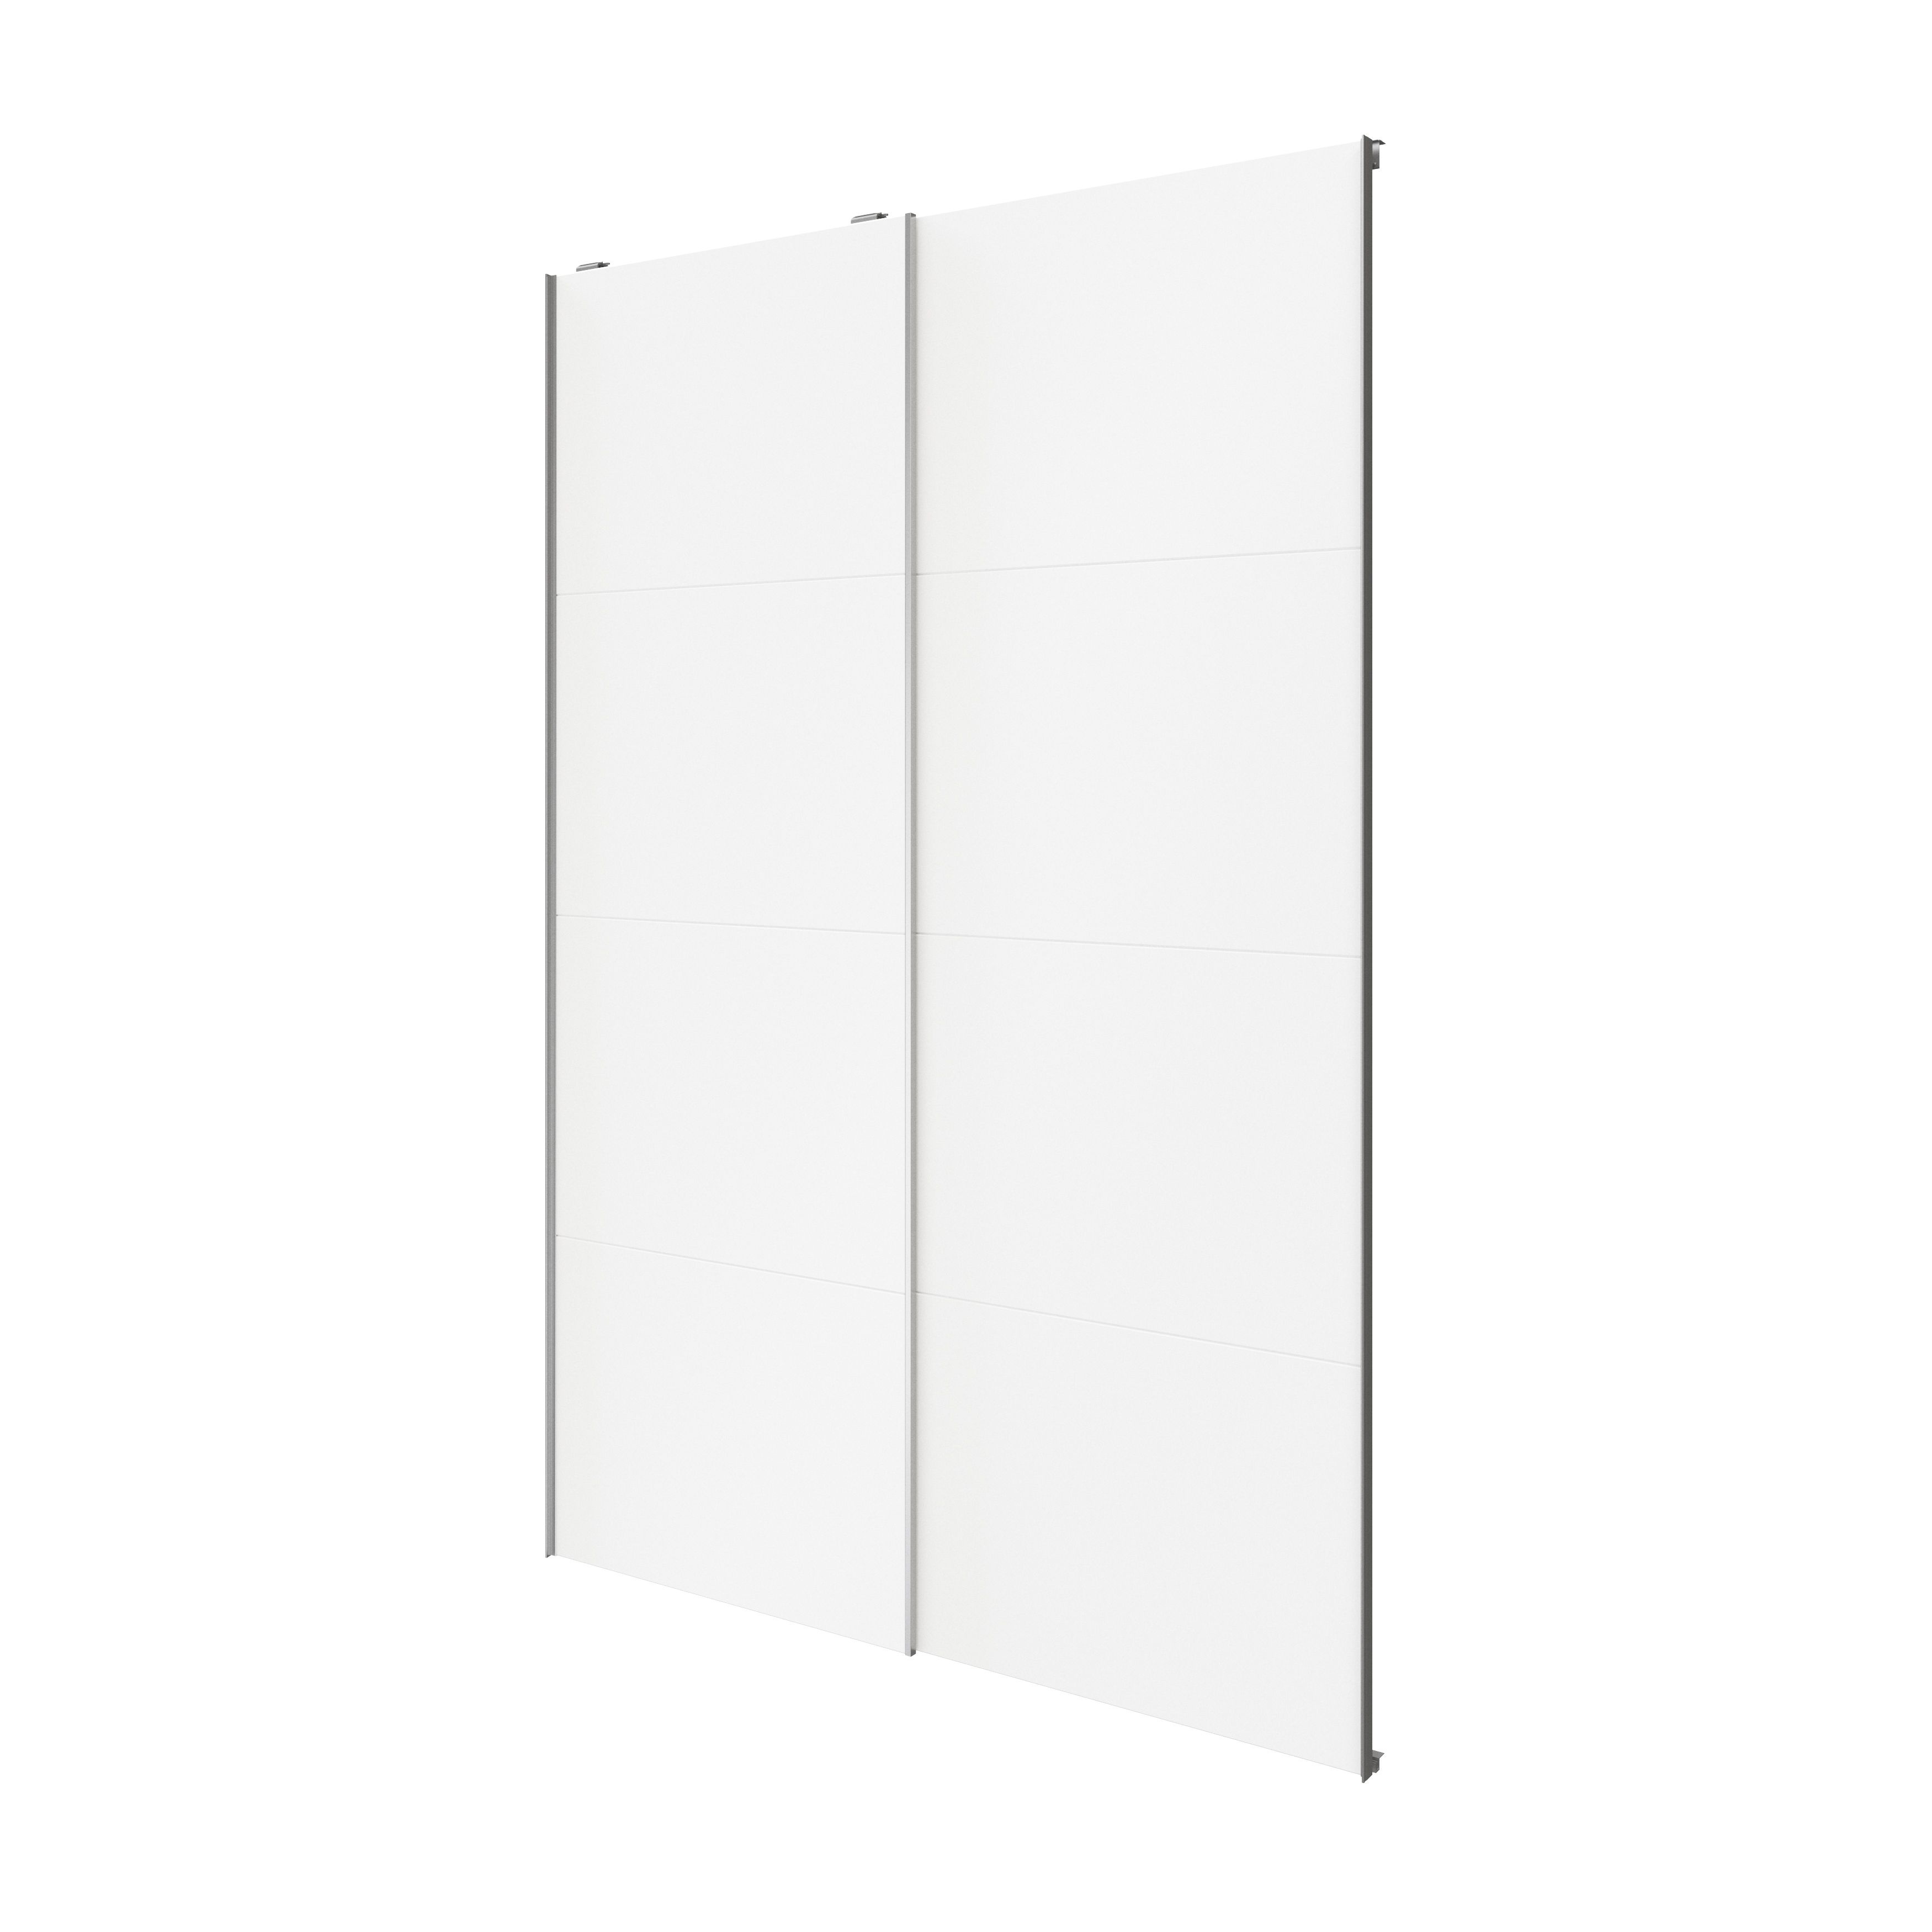 Atomia Panelled White 2 door Sliding Wardrobe Door kit (H)2250mm (W)1500mm